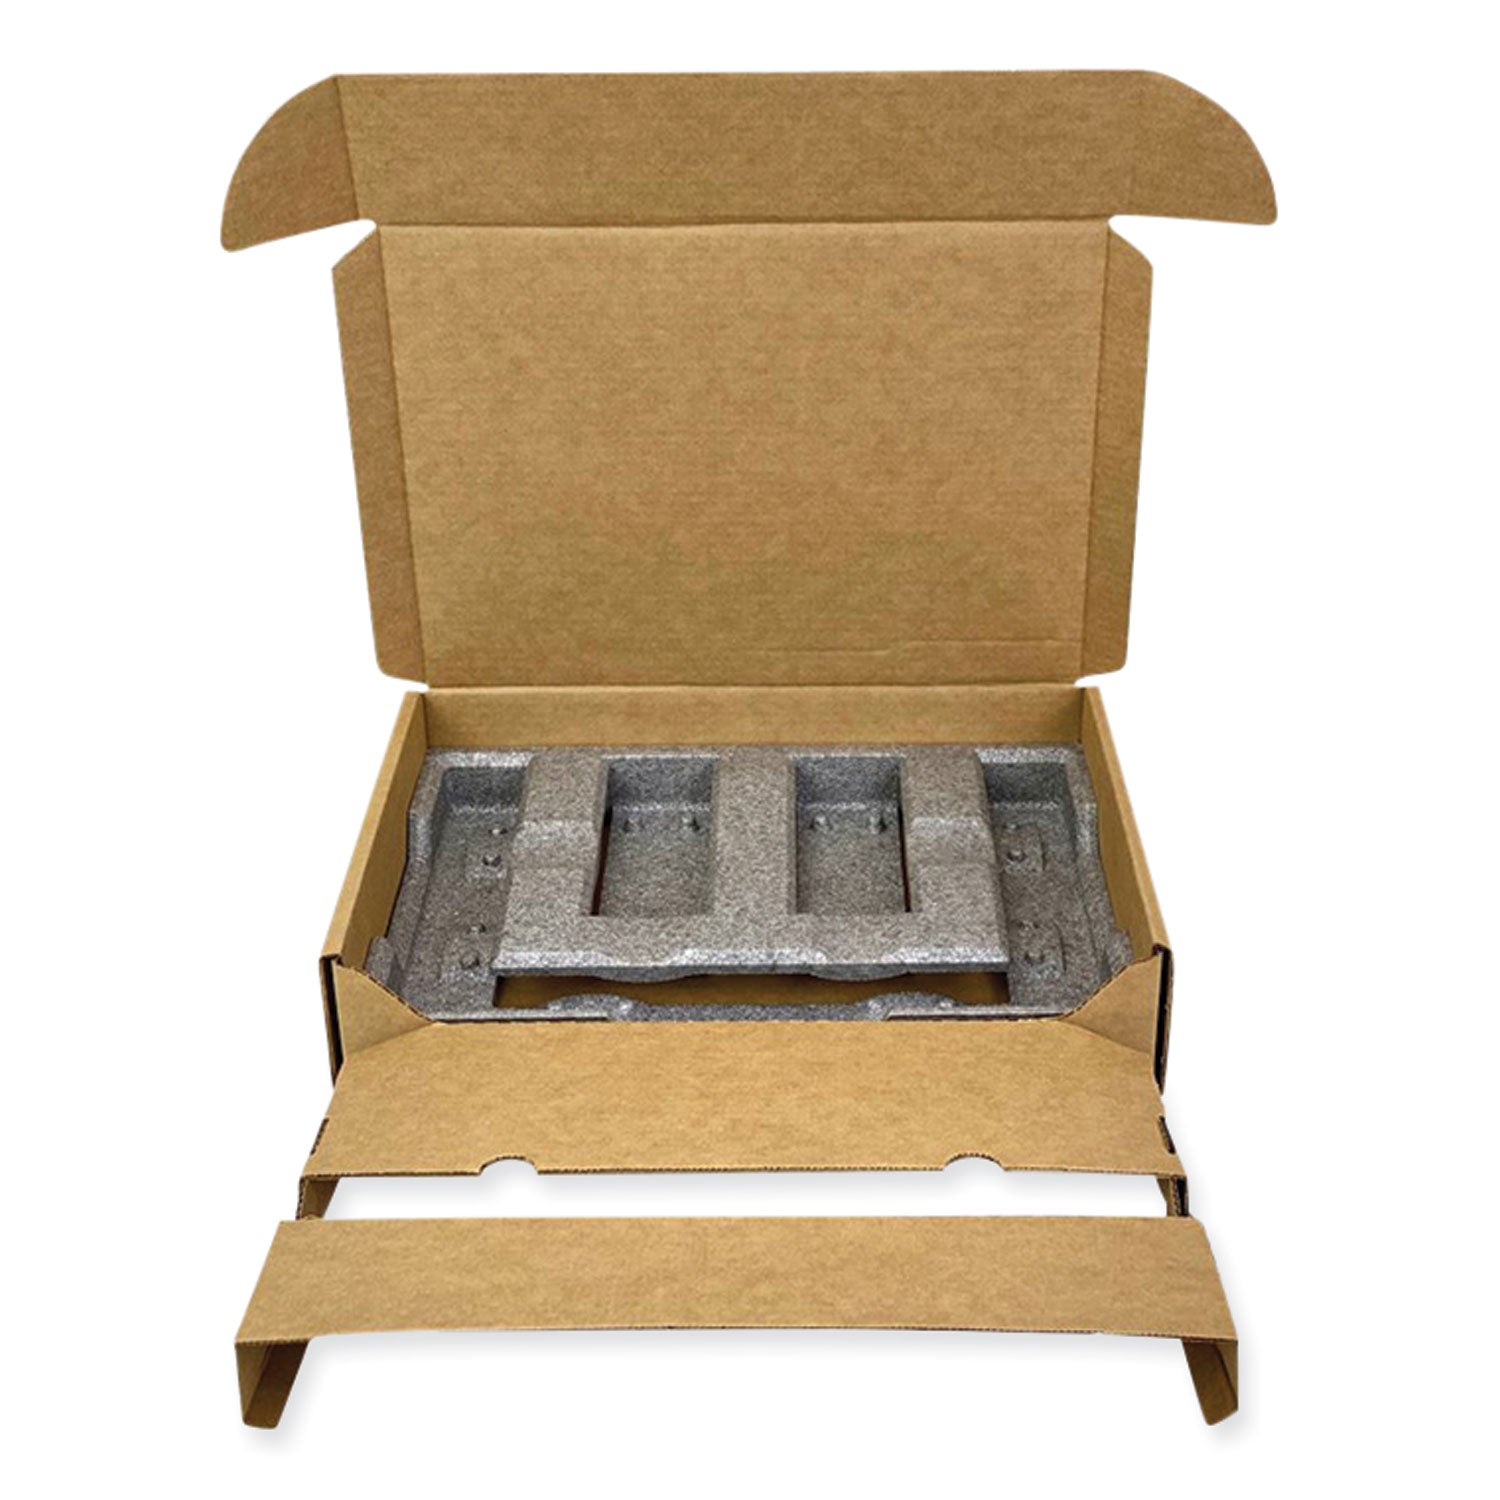 laptop-shipping-box-one-piece-foldover-opf-large-1725-x-1168-x-375-brown-kraft_epultcs00401 - 3